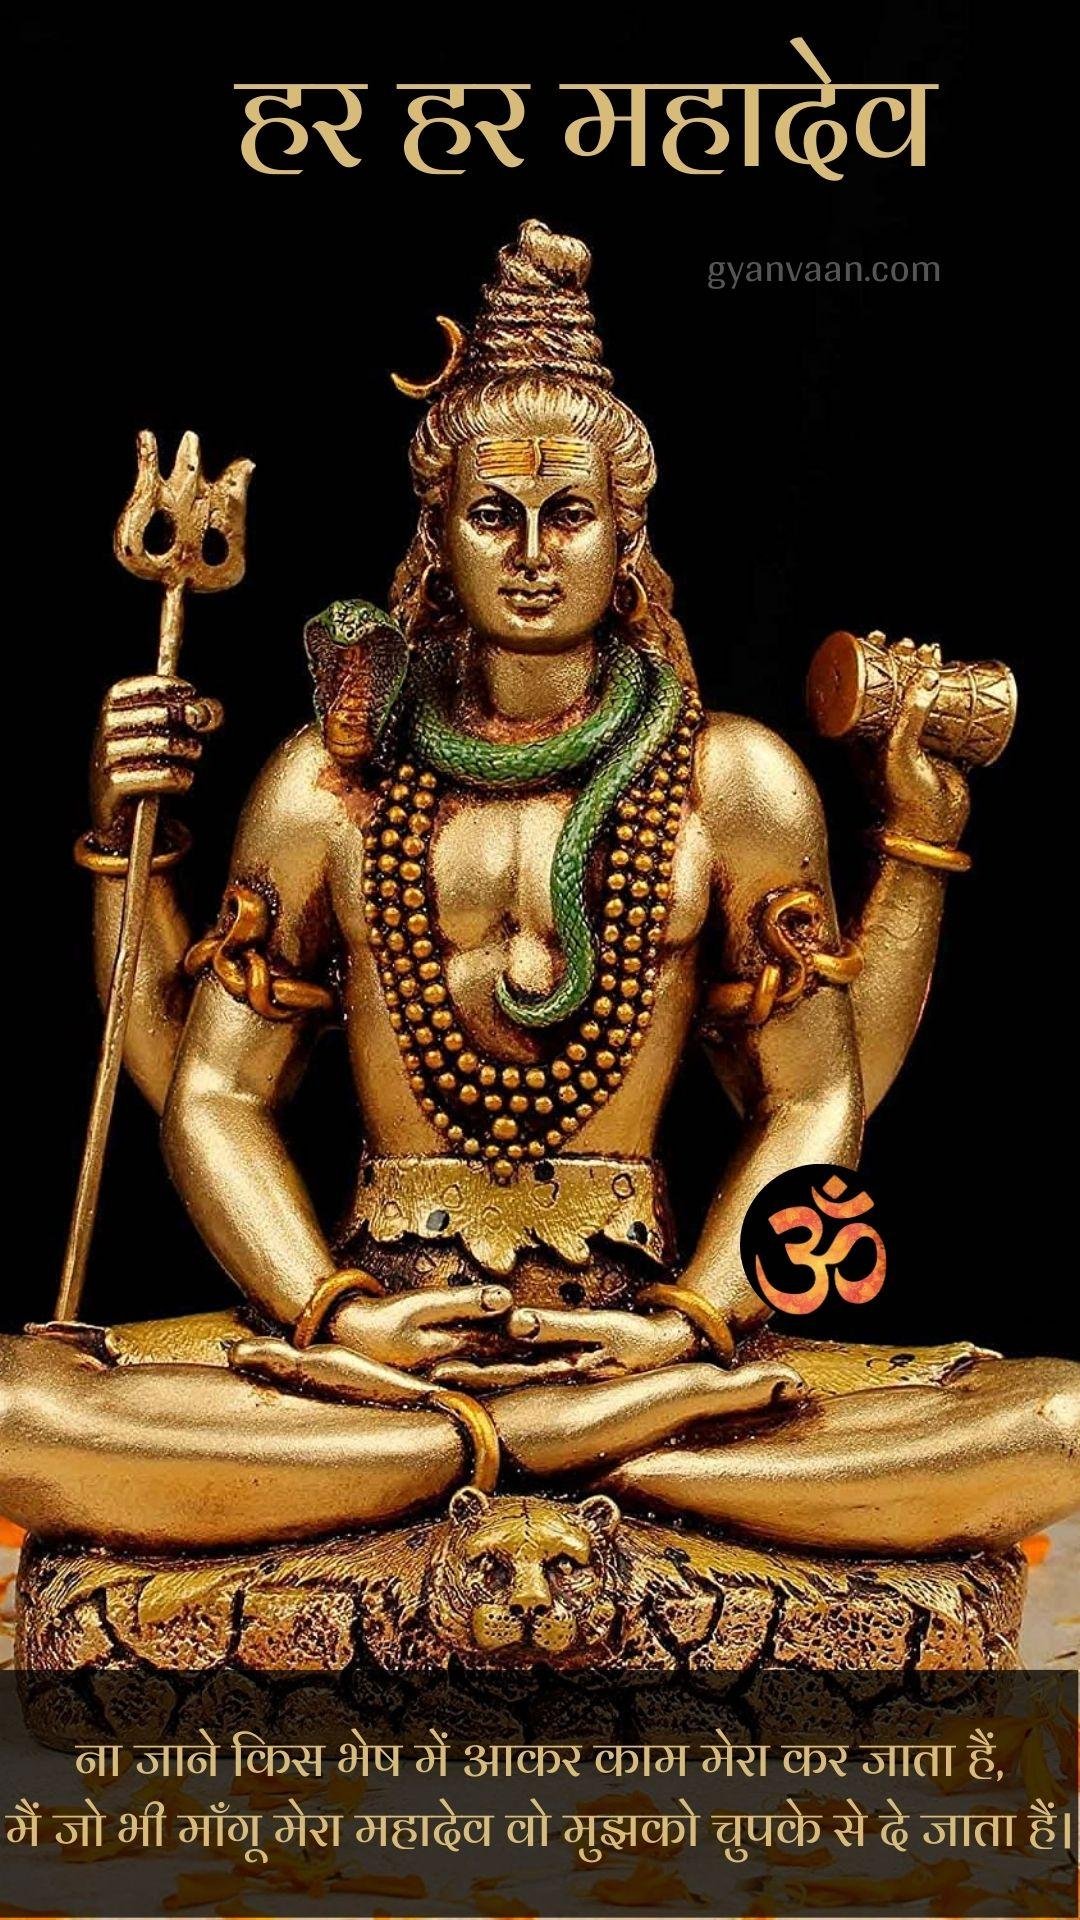 Lord Shiva Mahadev Quotes And Mahakal Status In Hindi For Mobile 11 - Shiva Quotes